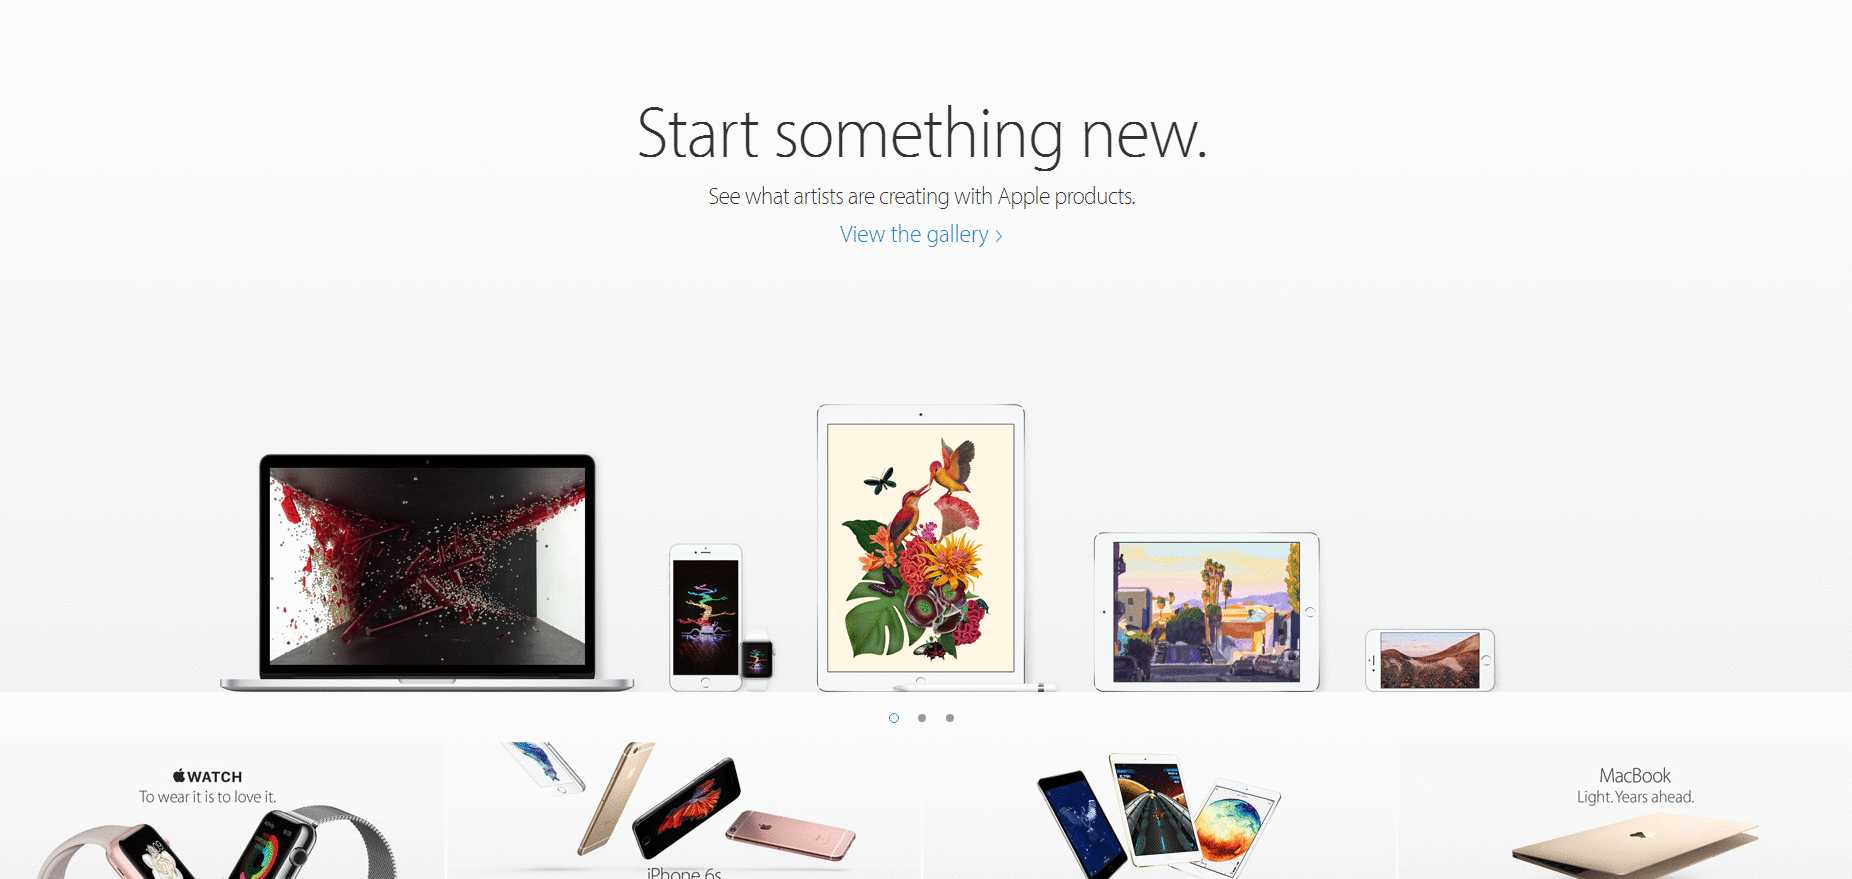 apple.com Website Design in 2016